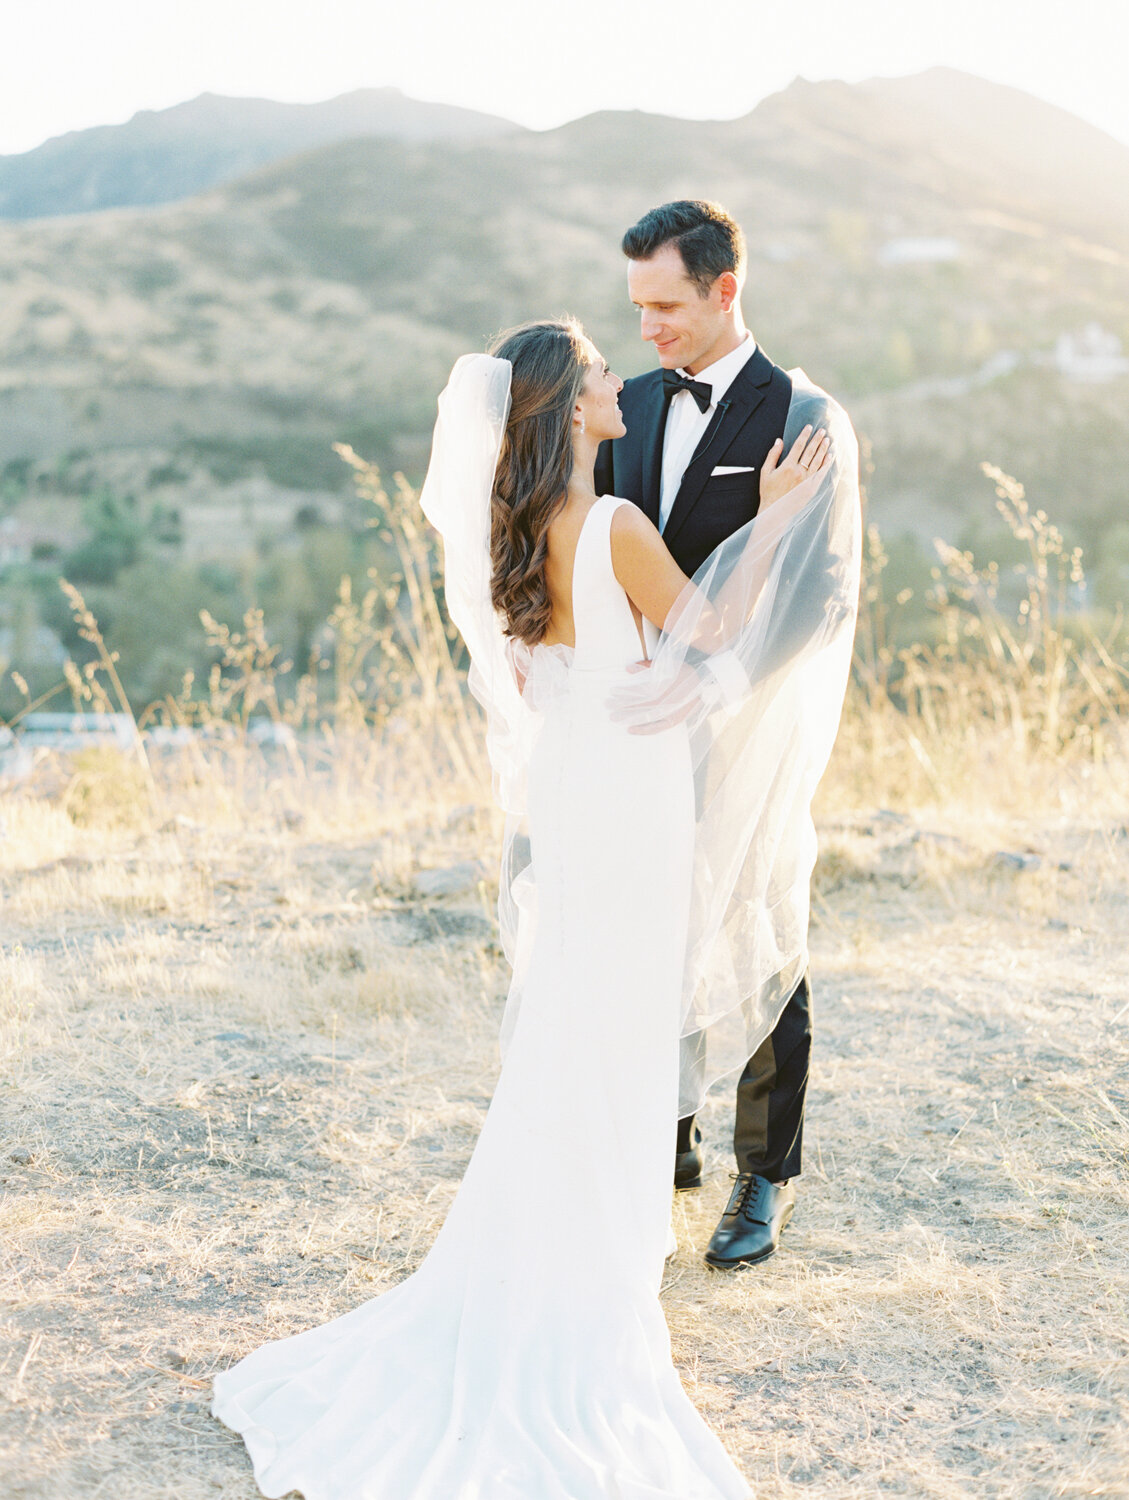 wisteria-photography.com | Wisteria Photography | Triunfo Creek Vineyards | Weddings Engagement | Southern California Photographer-28.jpg